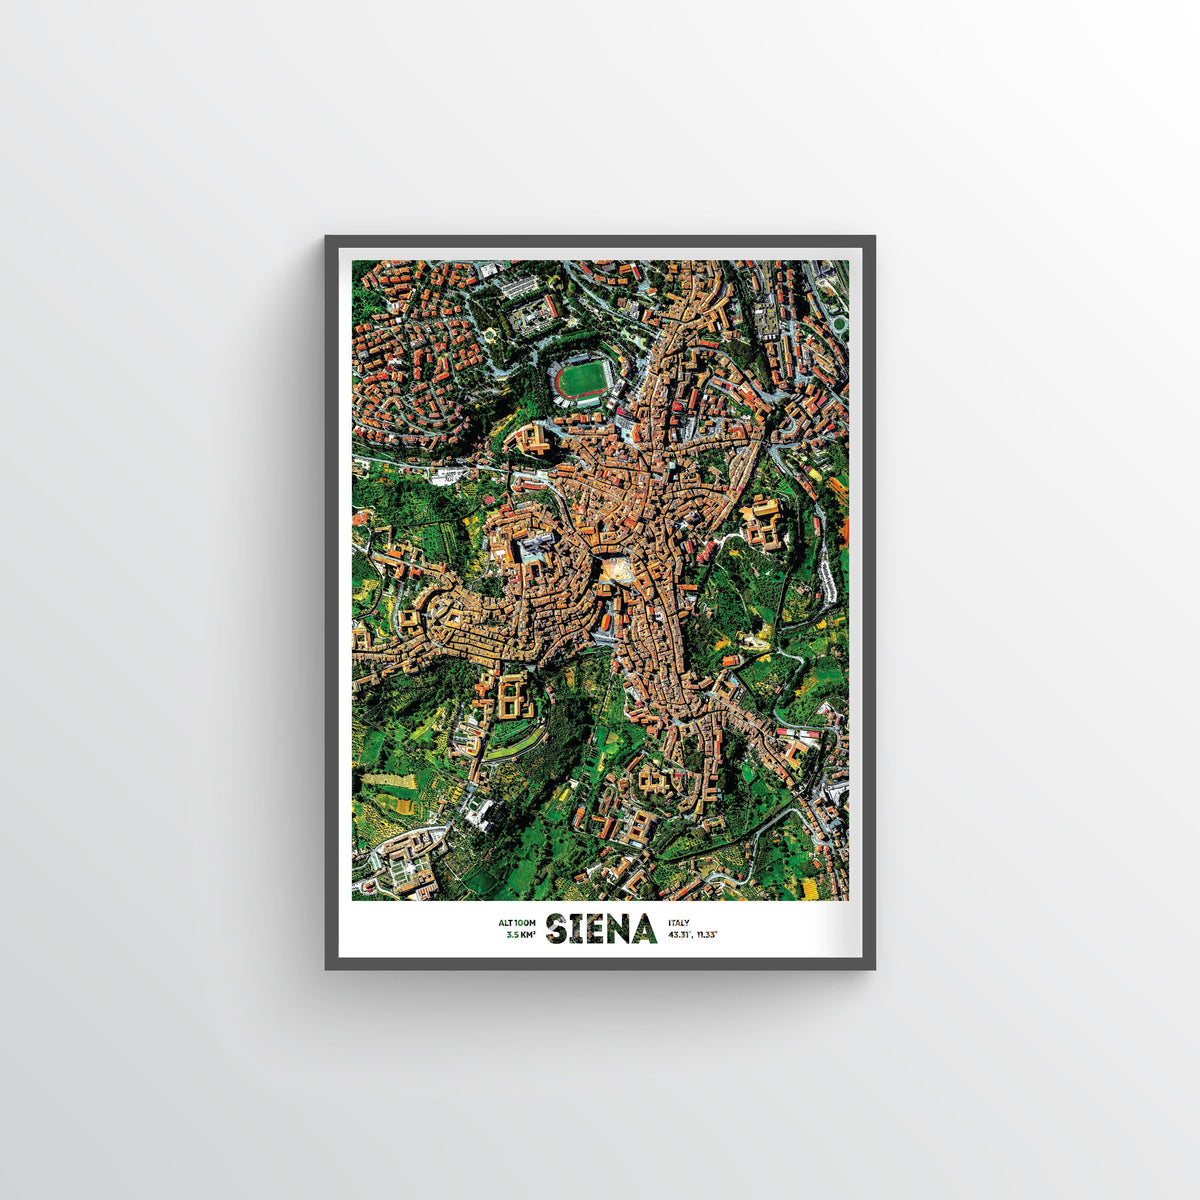 Siena Earth Photography - Art Print